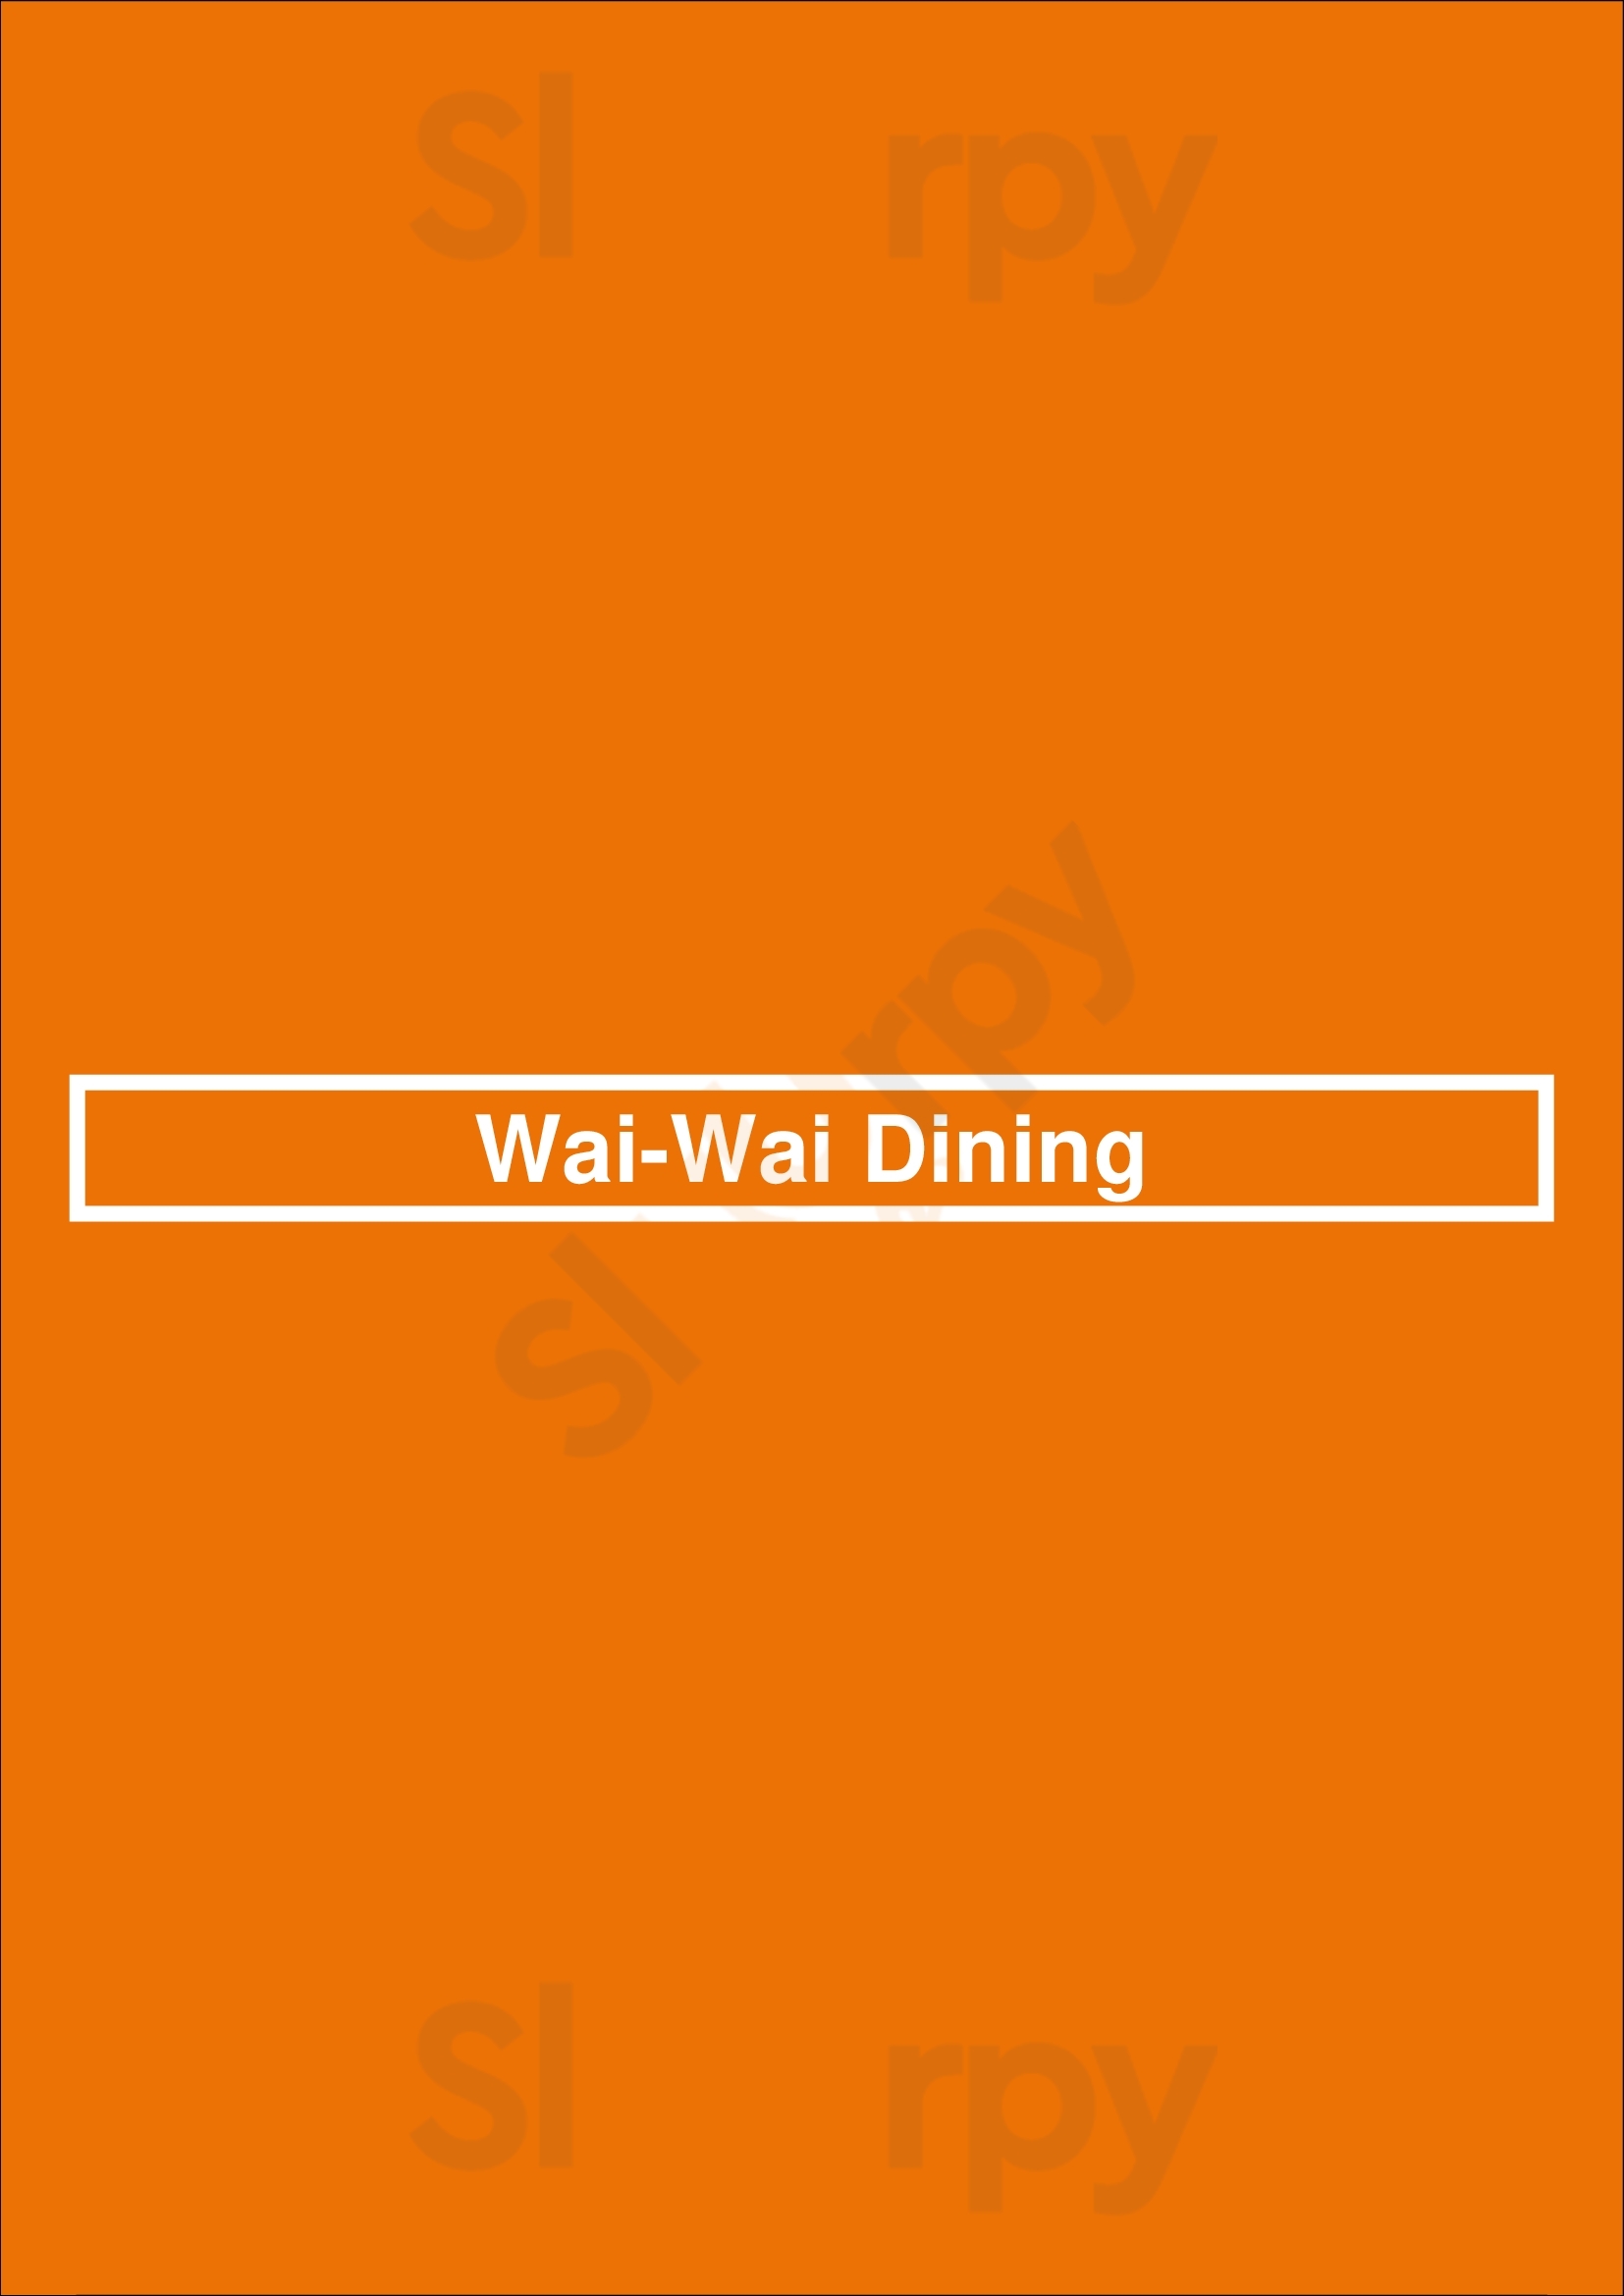 Wai-wai Dining Southport Menu - 1